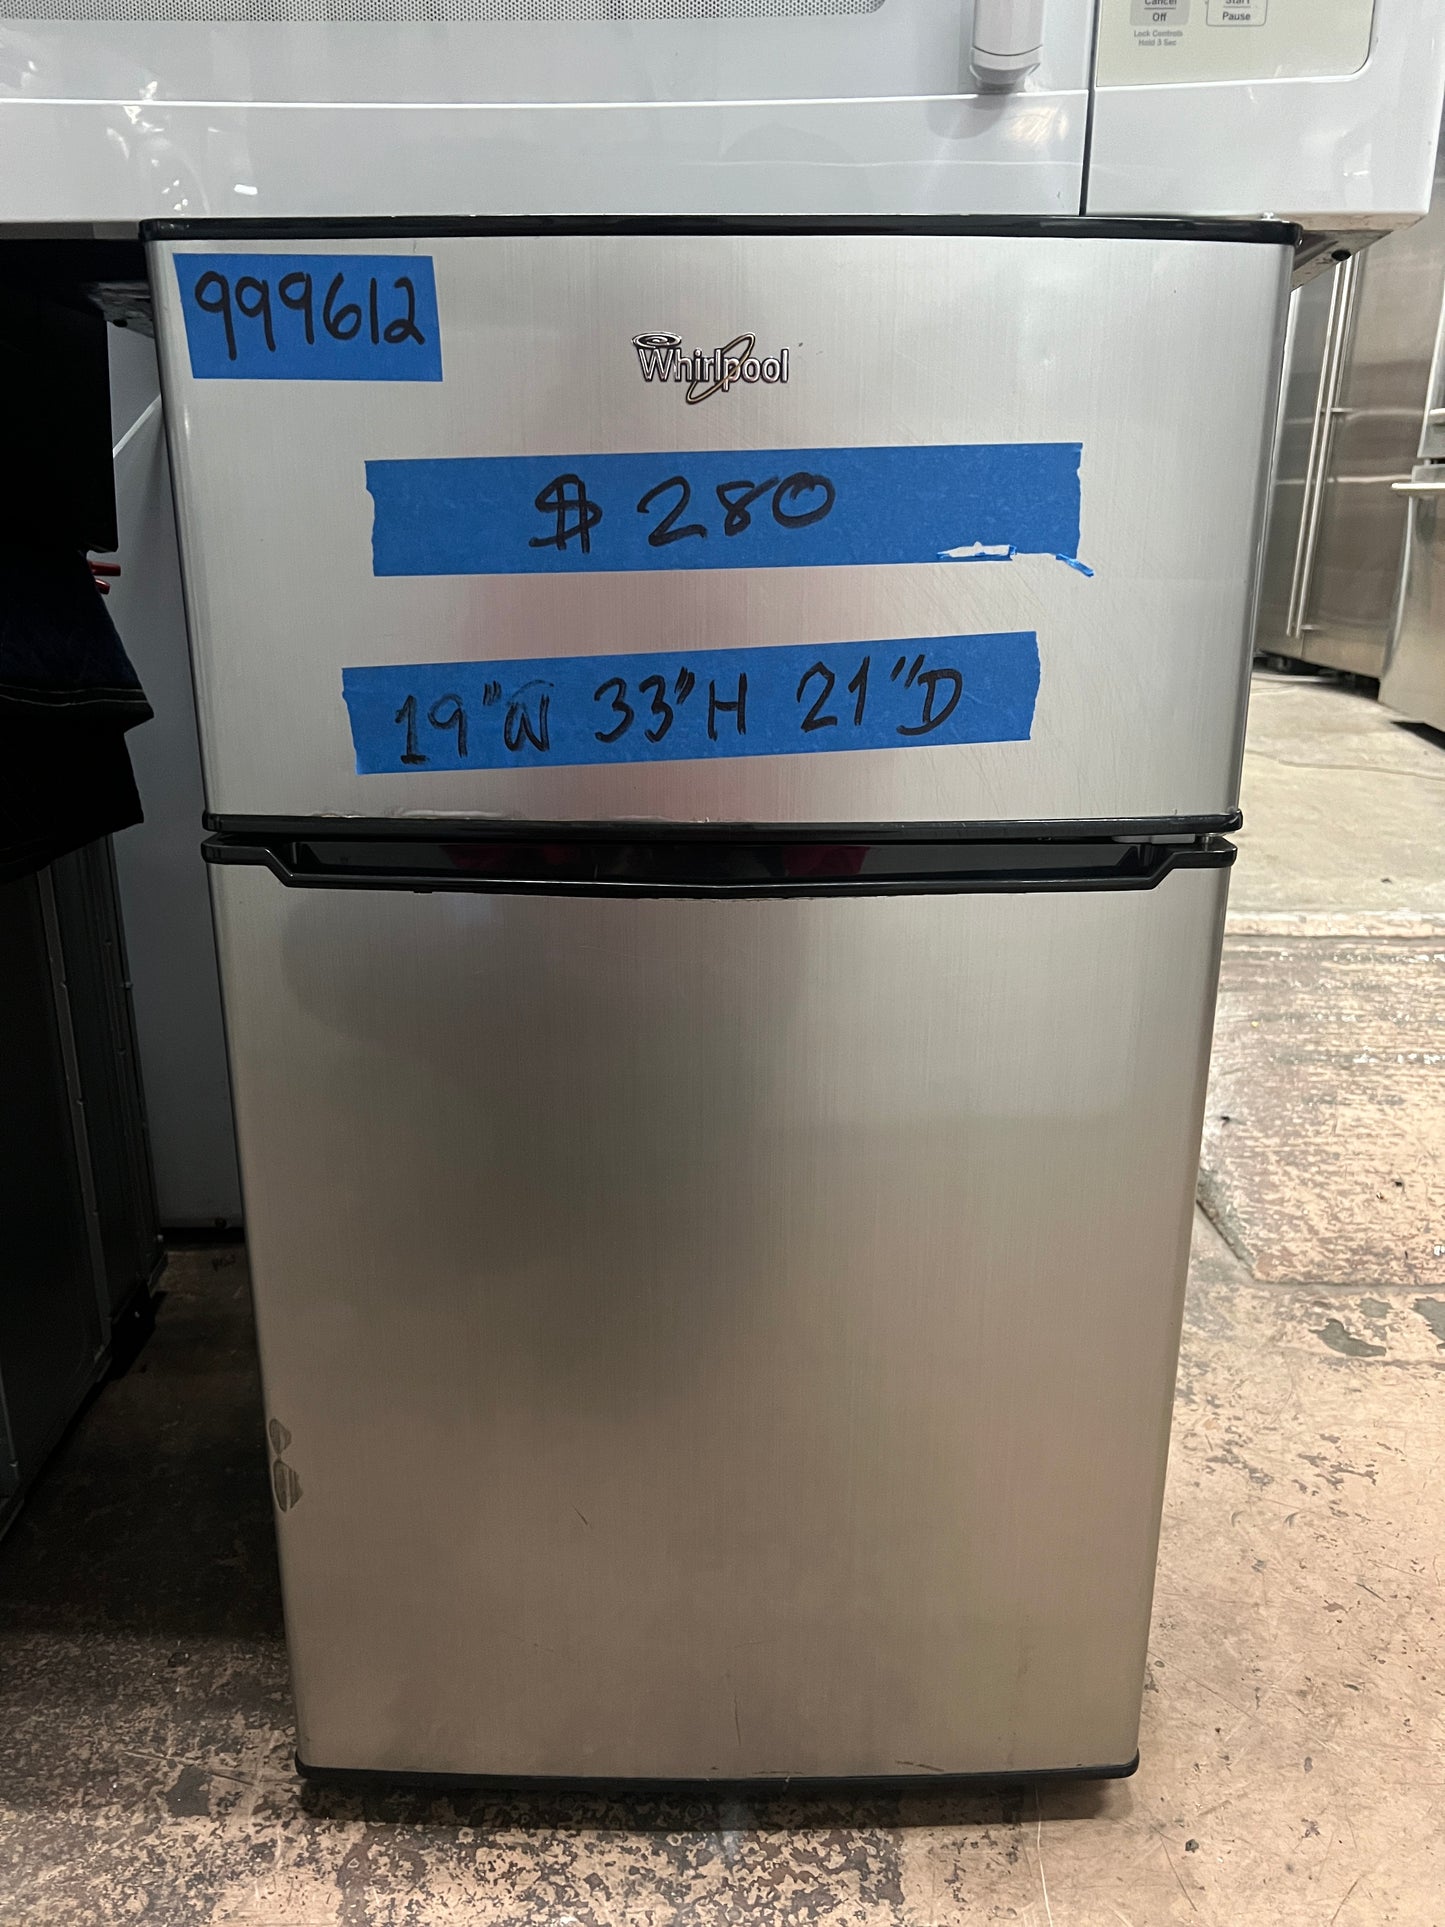 Whirlpool Mini Top Freezer refrigerator in Stainless Steel, 999612